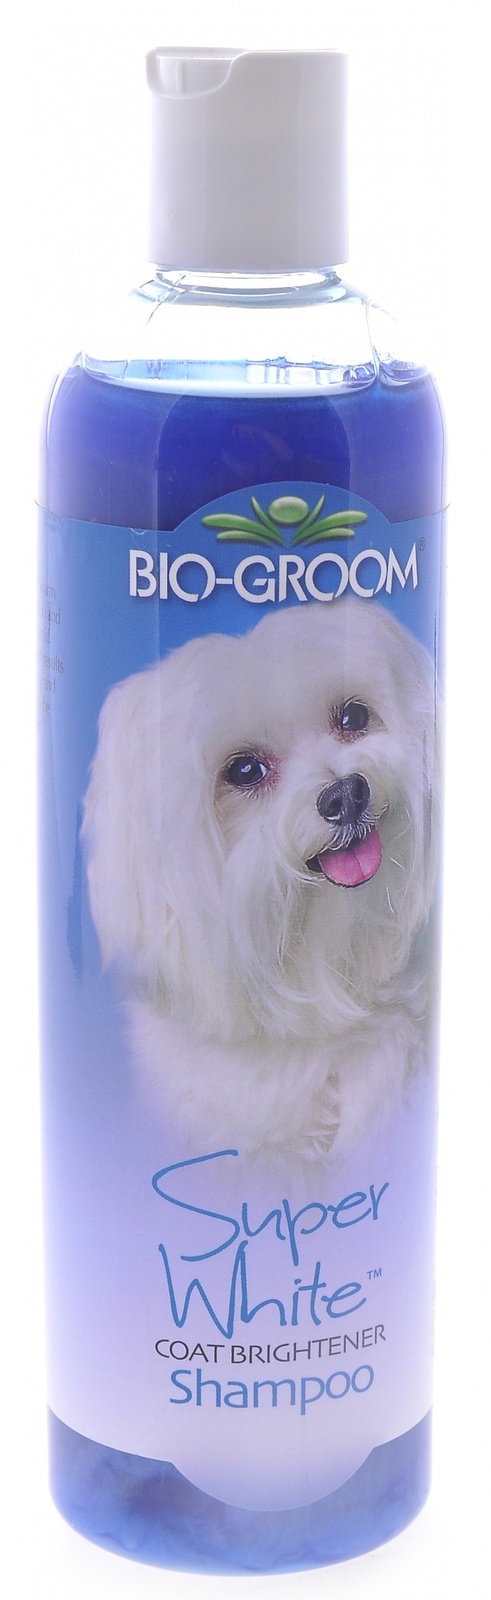 Biogroom Biogroom шампунь Супер Белый, концентрация 1:8, 3.2 литра готового шампуня (355 г) шампунь bio groom ultra black ультра черный 355 мл